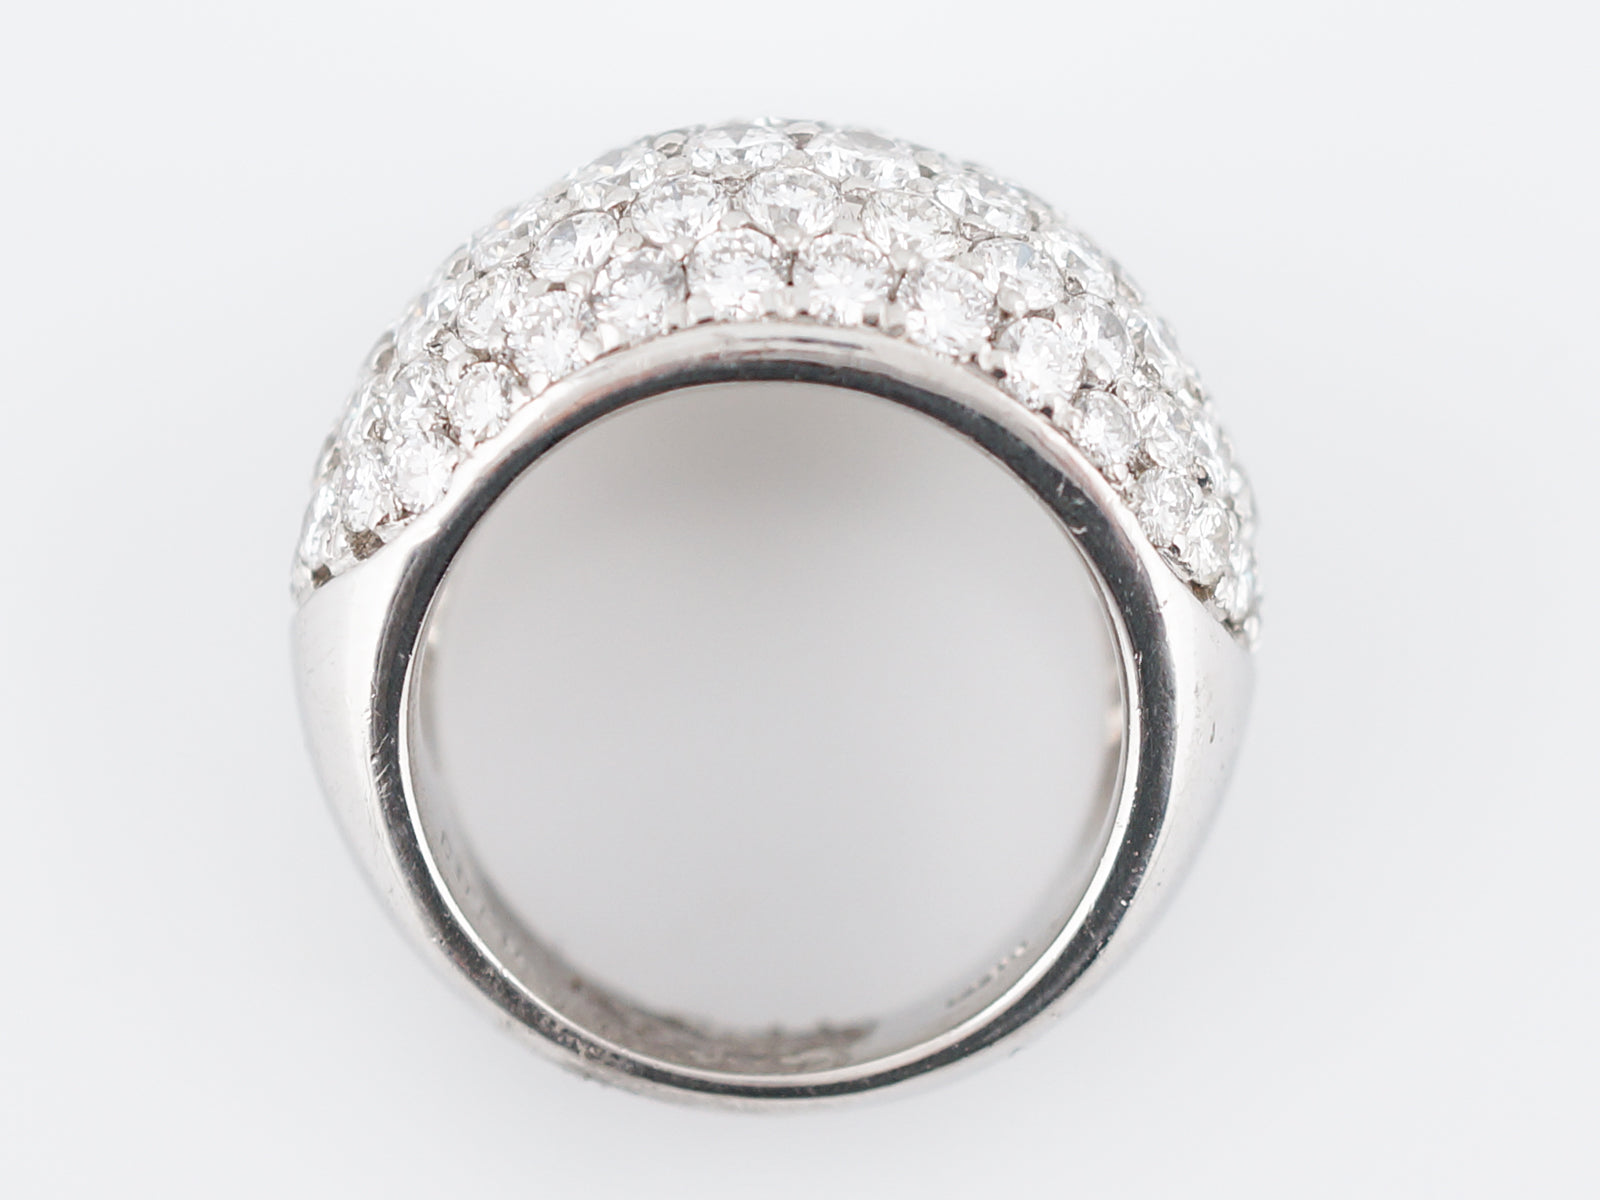 Right Hand Ring Modern Pave 4.83 Round Brilliant Cut Diamonds in Platinum